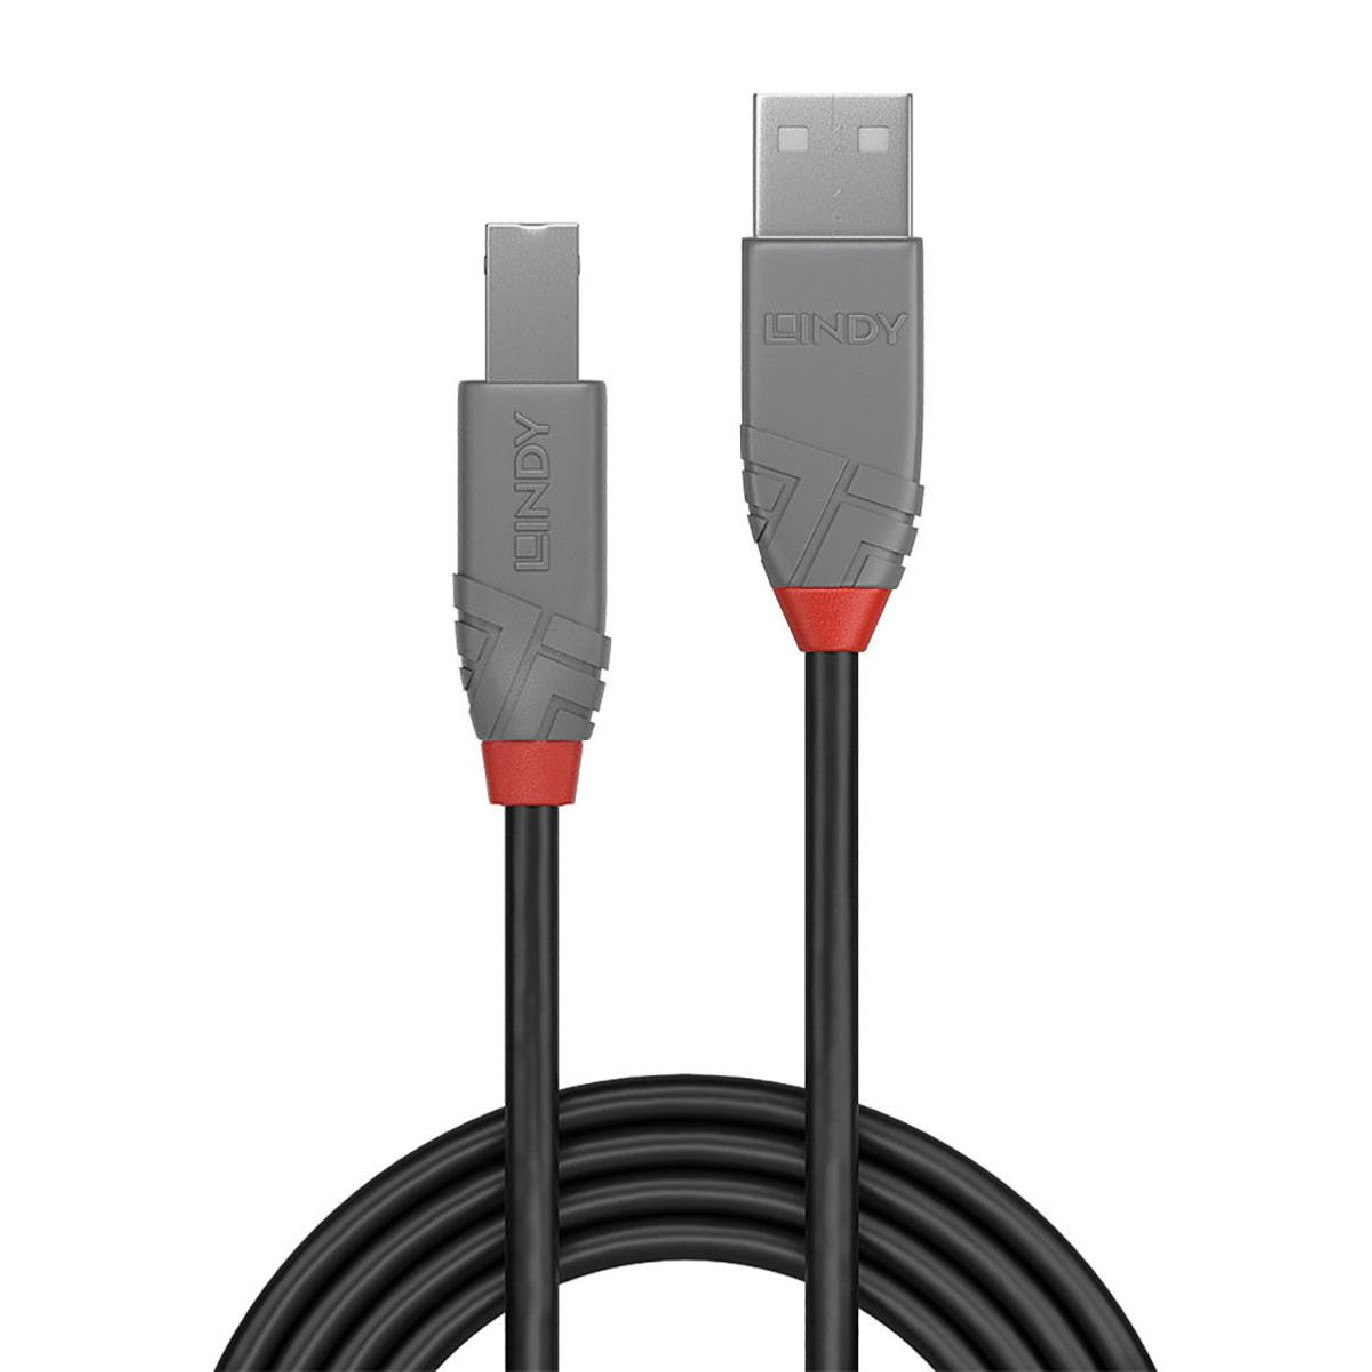 Cable imprimante USB 2.0 A vers B blanc